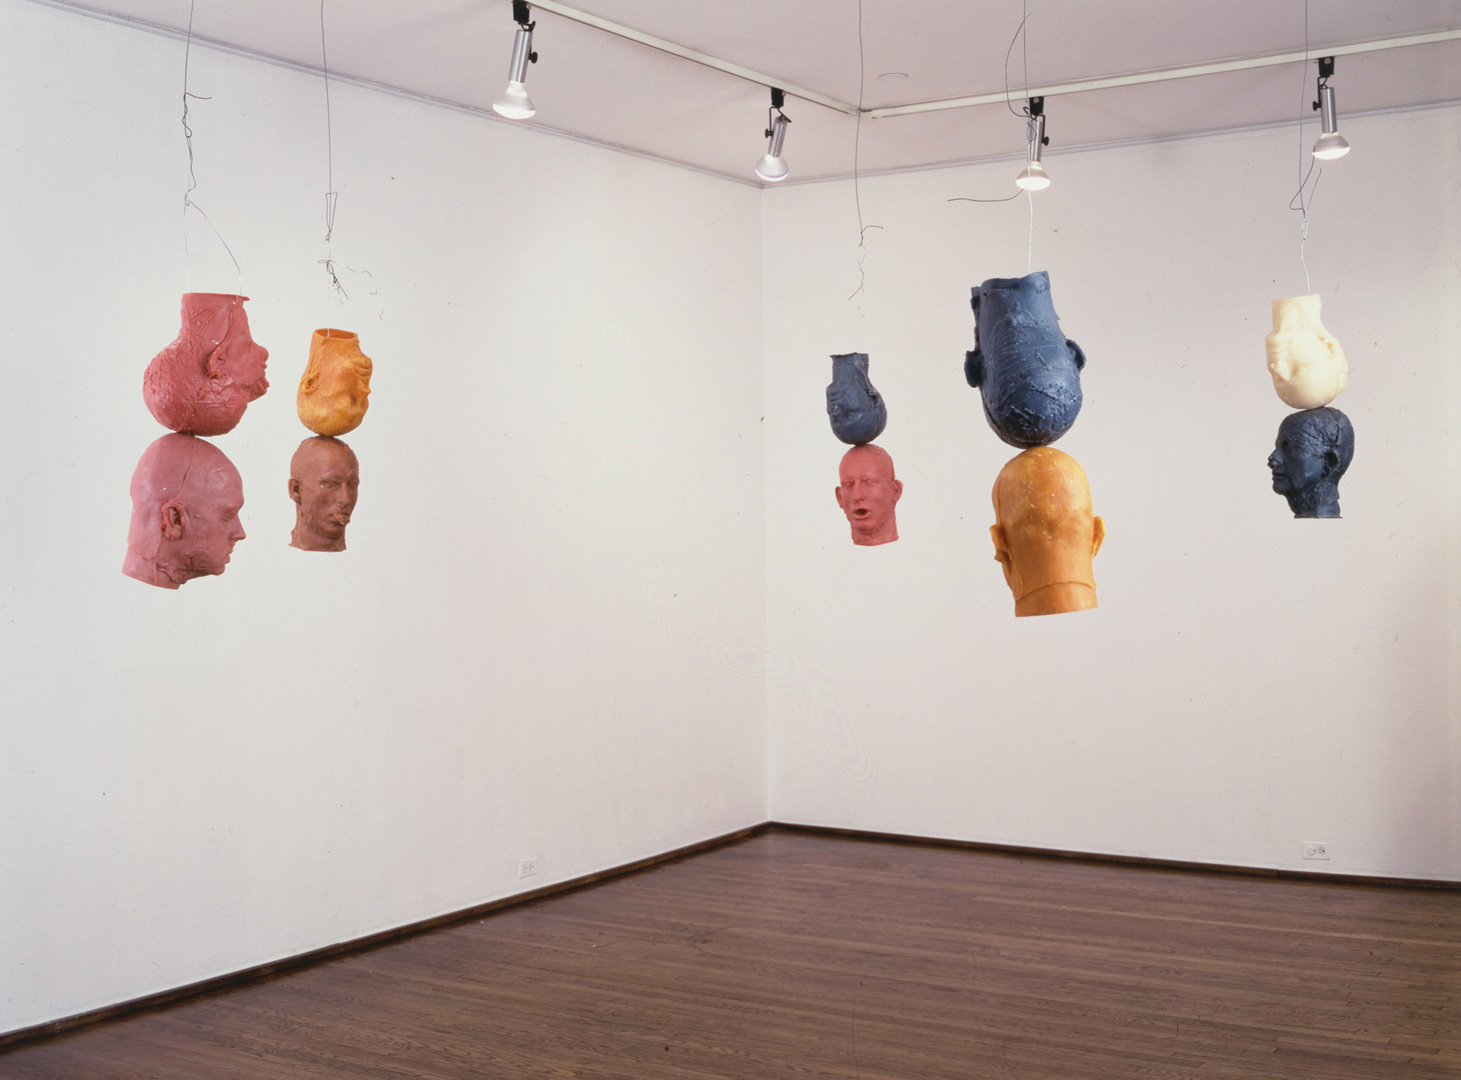 Bruce Nauman - Ten Heads Circle/Up and Down, 1990, wax, wire